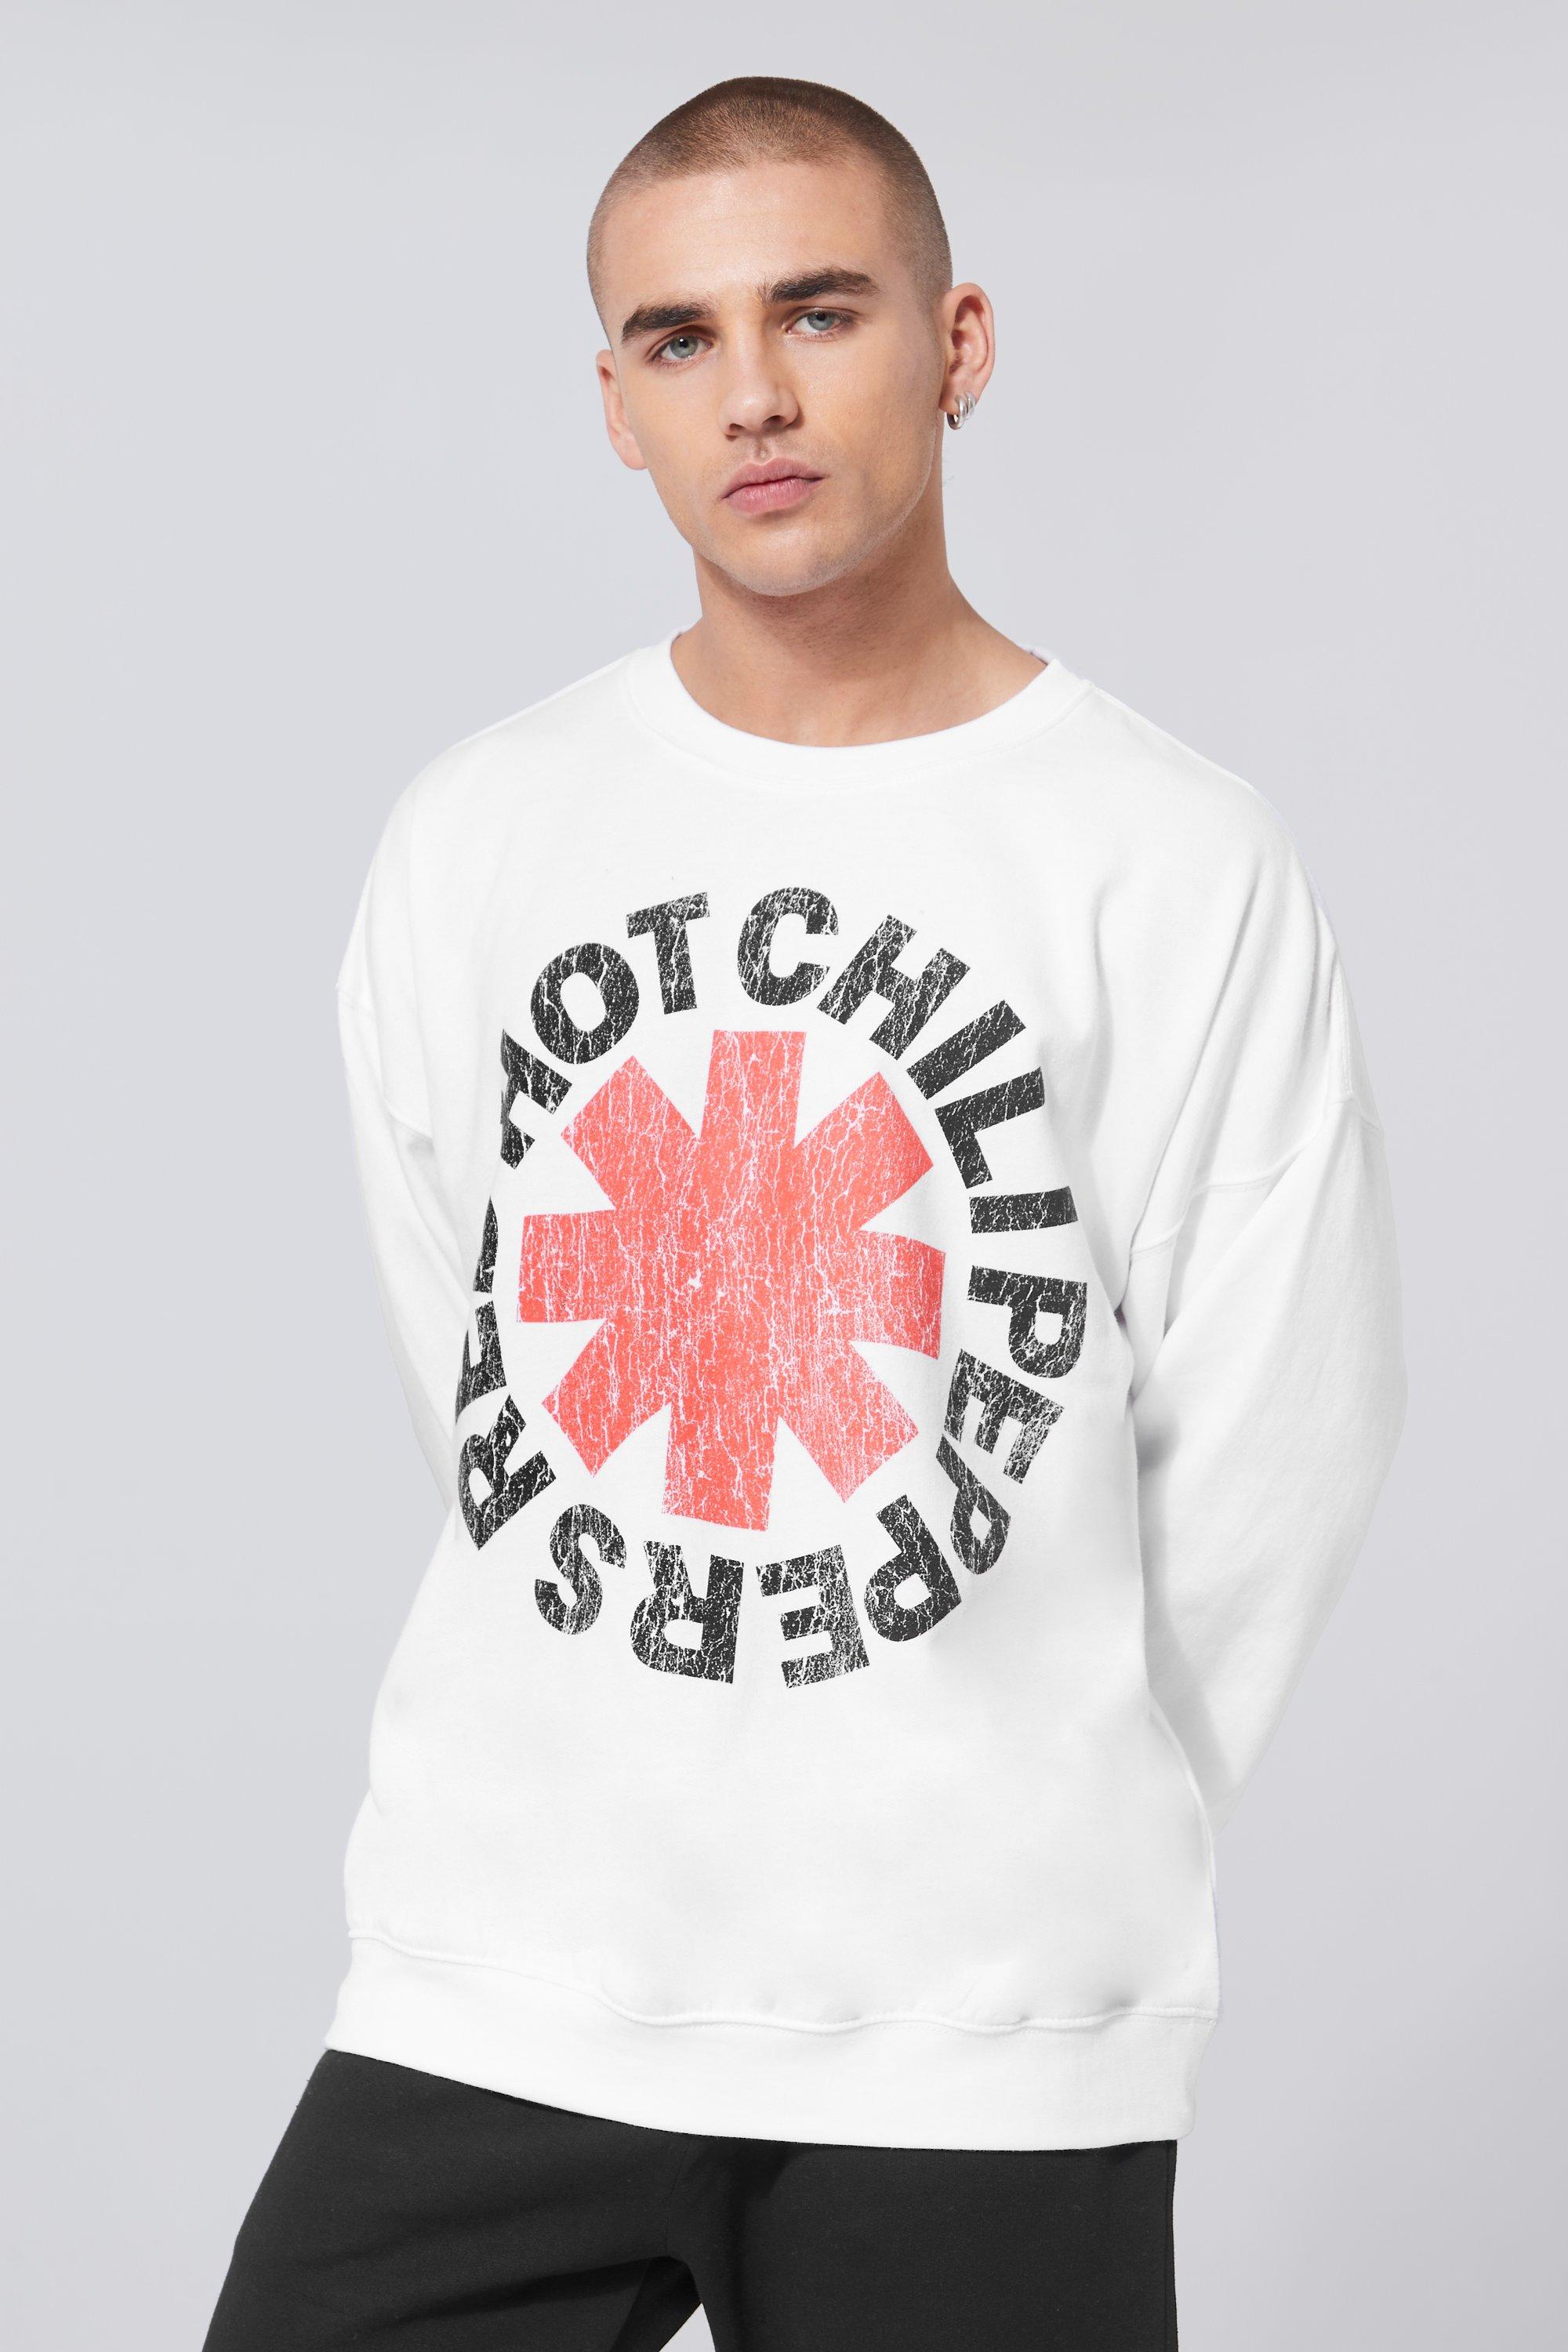 Oversized Red Hot Chili Peppers boohooMAN USA Sweatshirt 